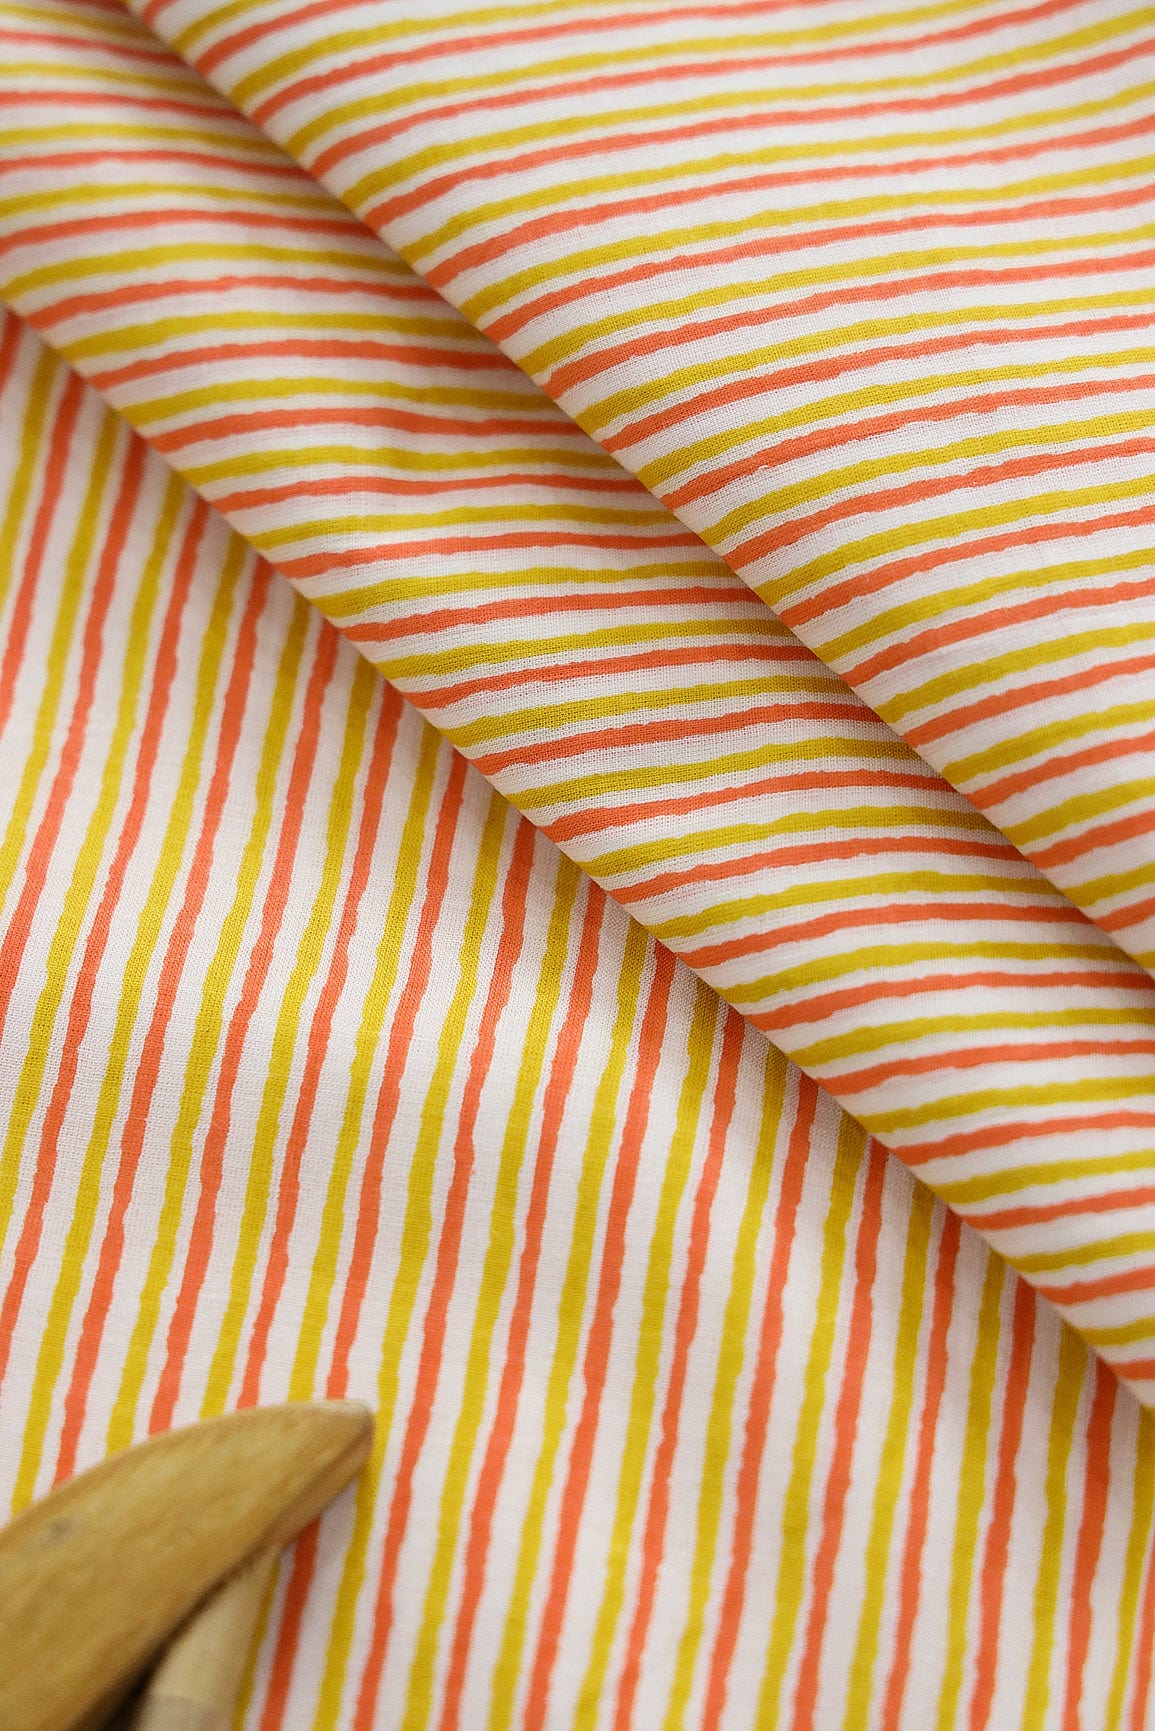 doeraa Prints Yellow and Orange Stripes Screen Print on organic Cotton Fabric